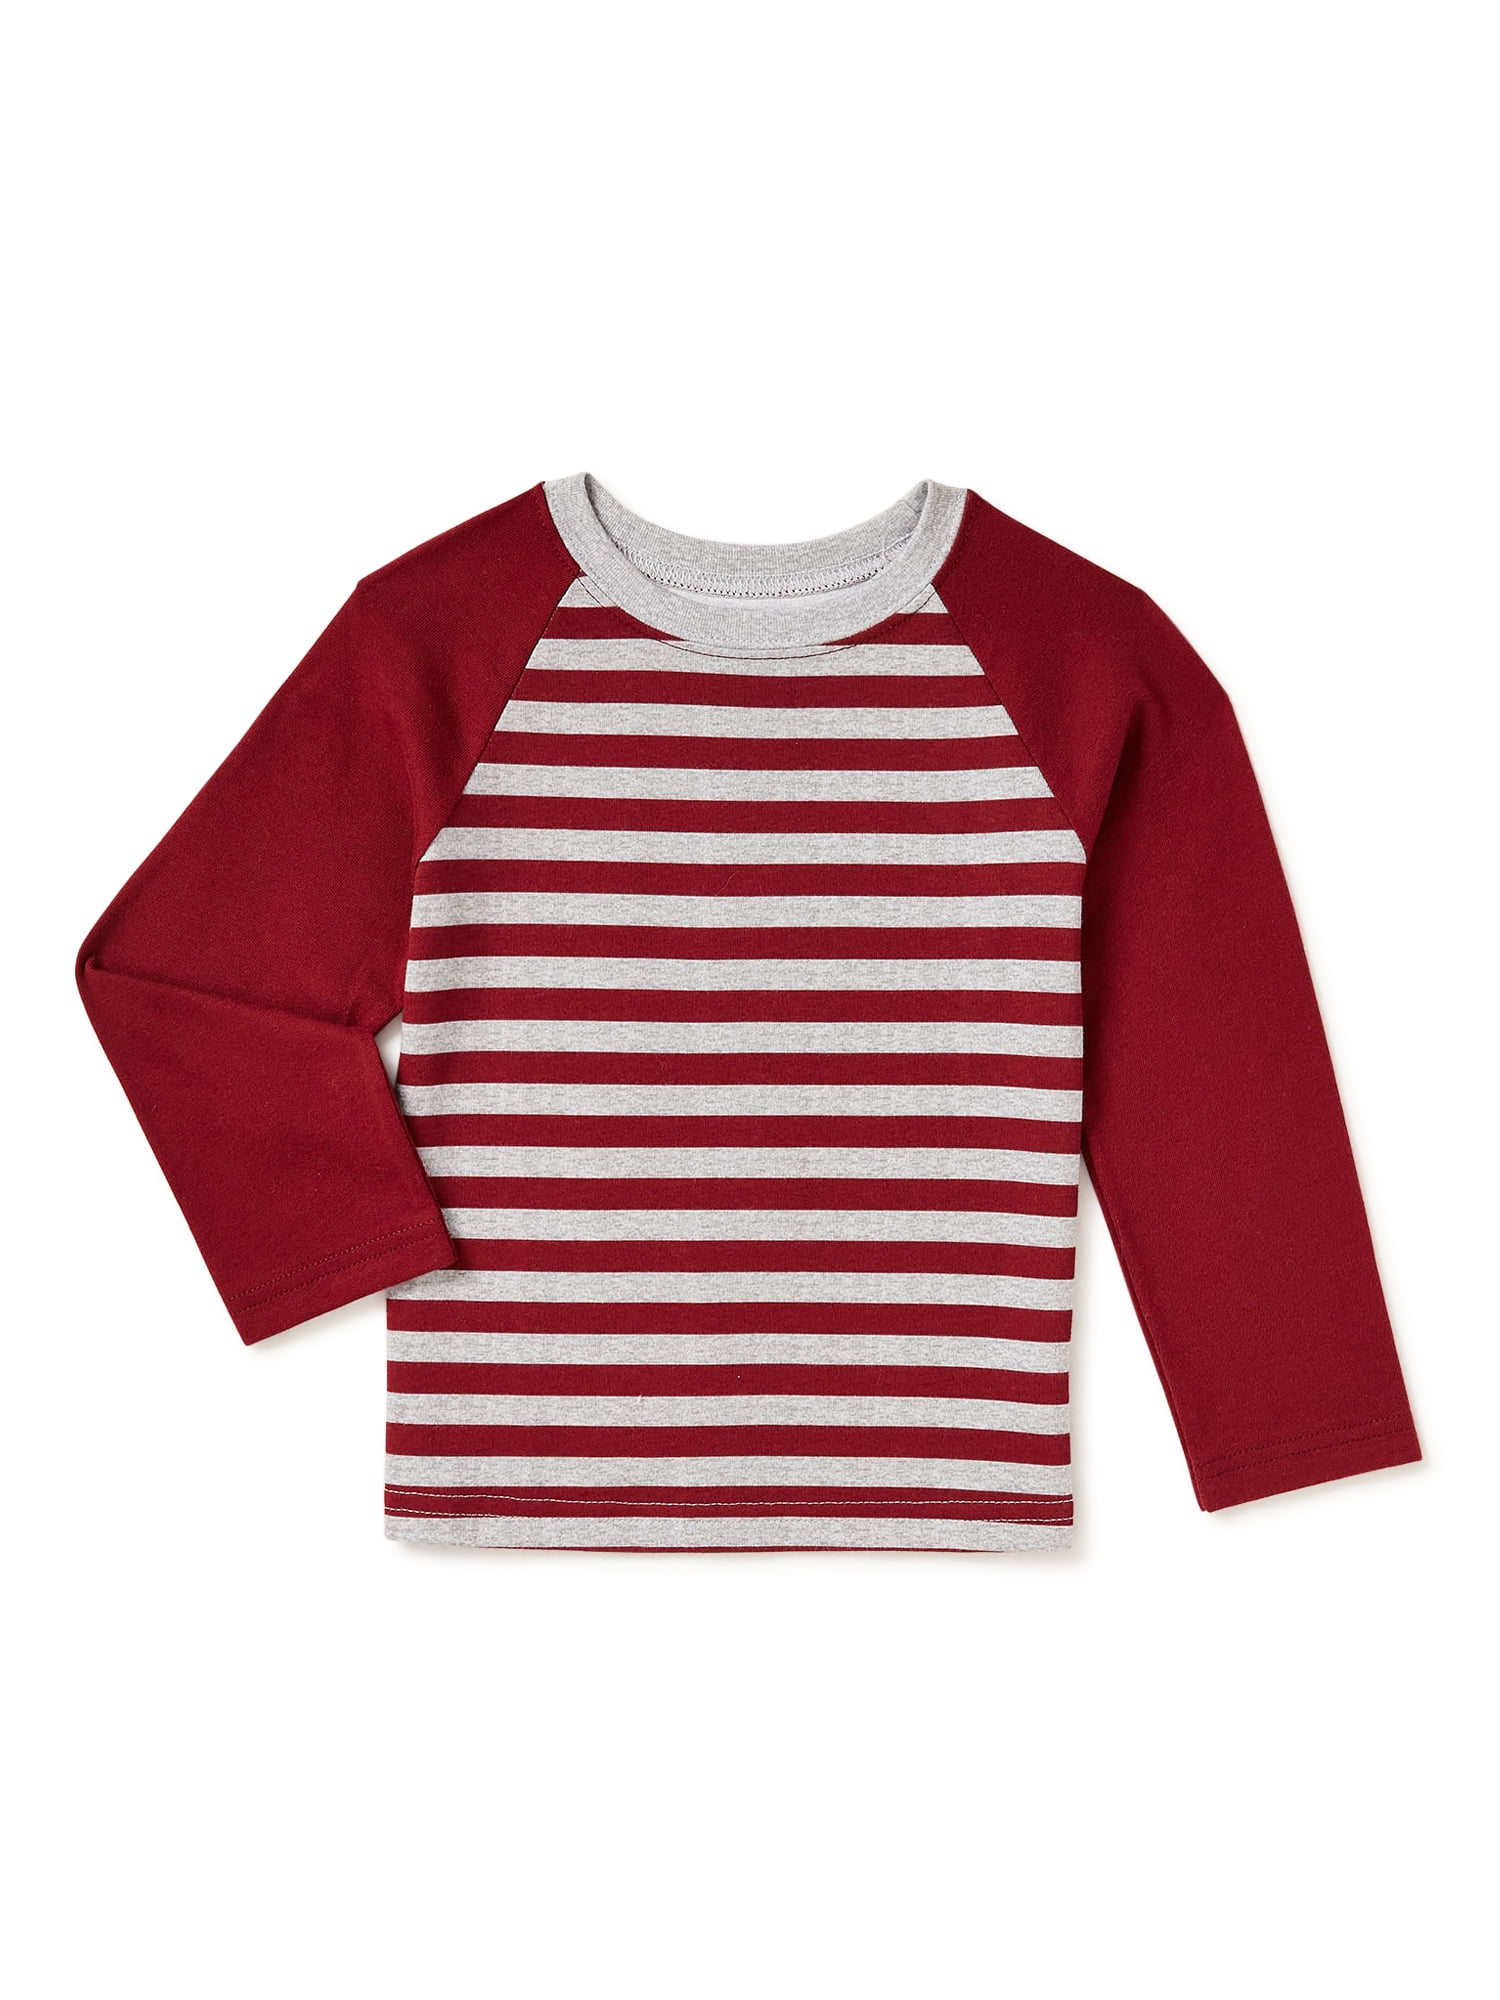 Baby GAP Boys T-Shirt Tee Shirt Top Navy Red King Of Cool Long Sleeved 6-18m 